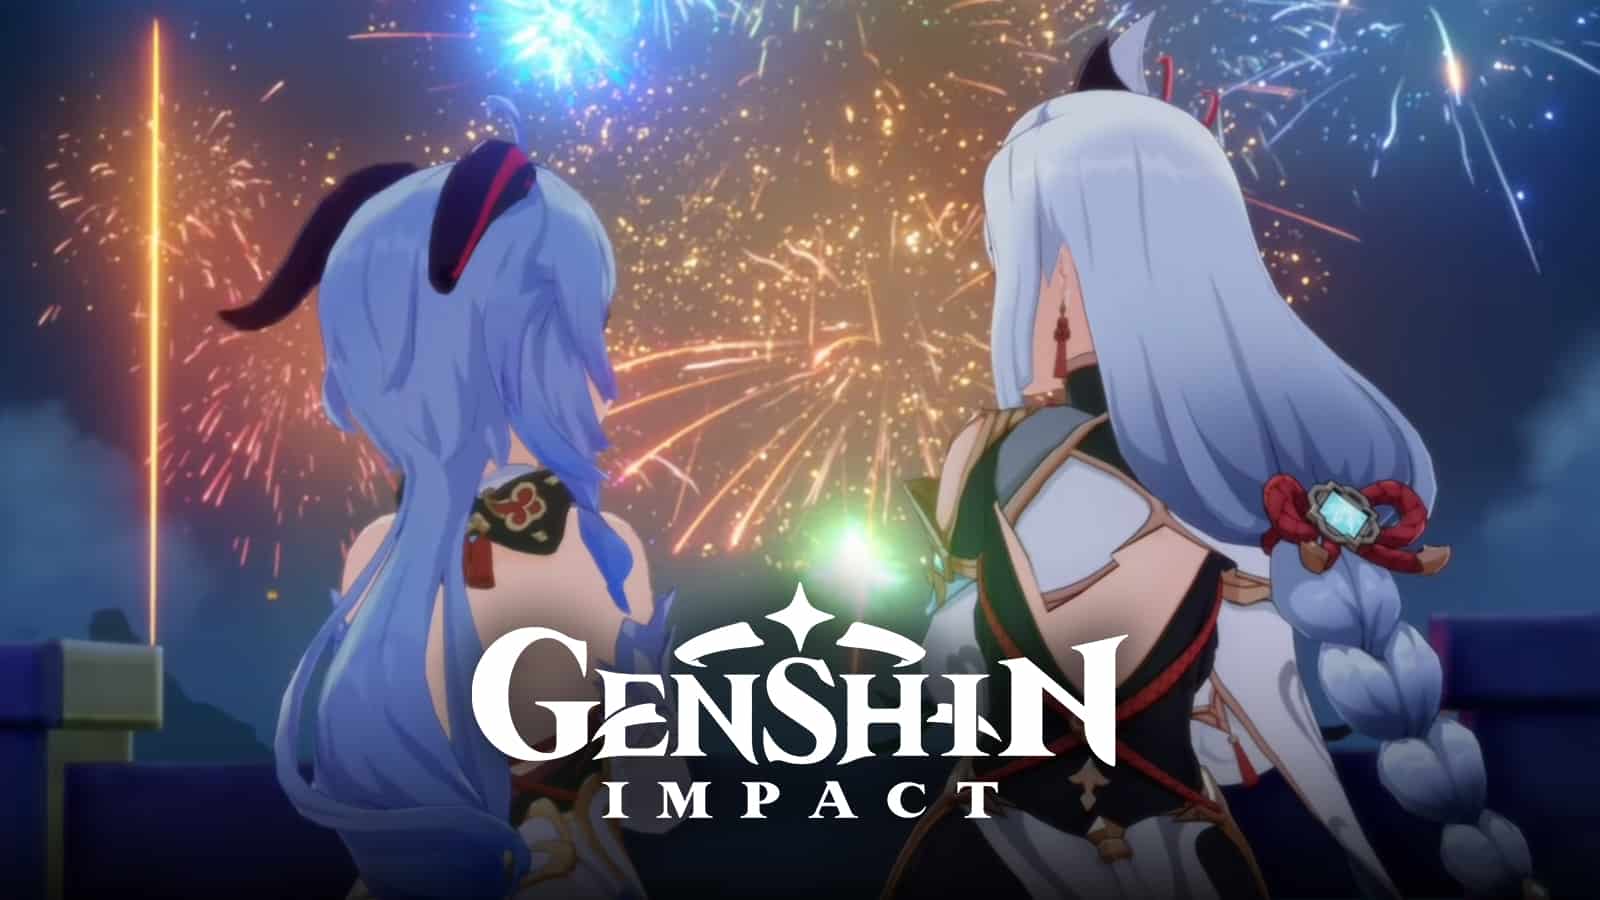 Ganyu and Shenhe during Lantern Rite event in Genshin Impact